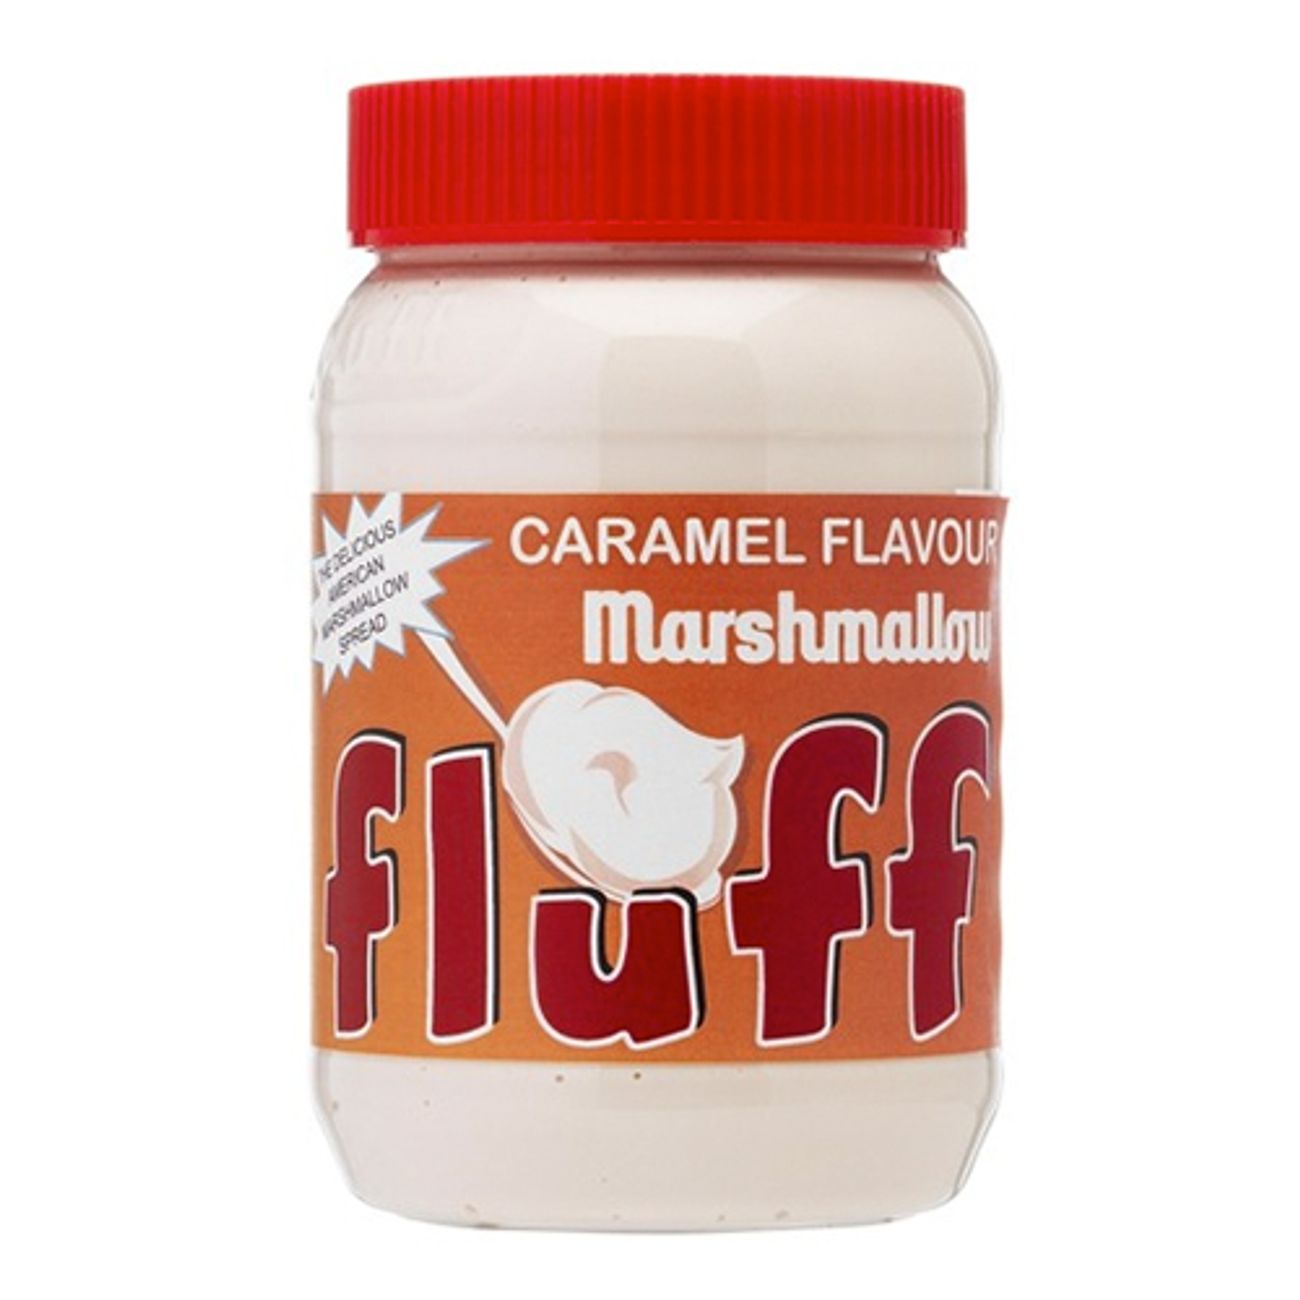 marshmallow-fluff-8